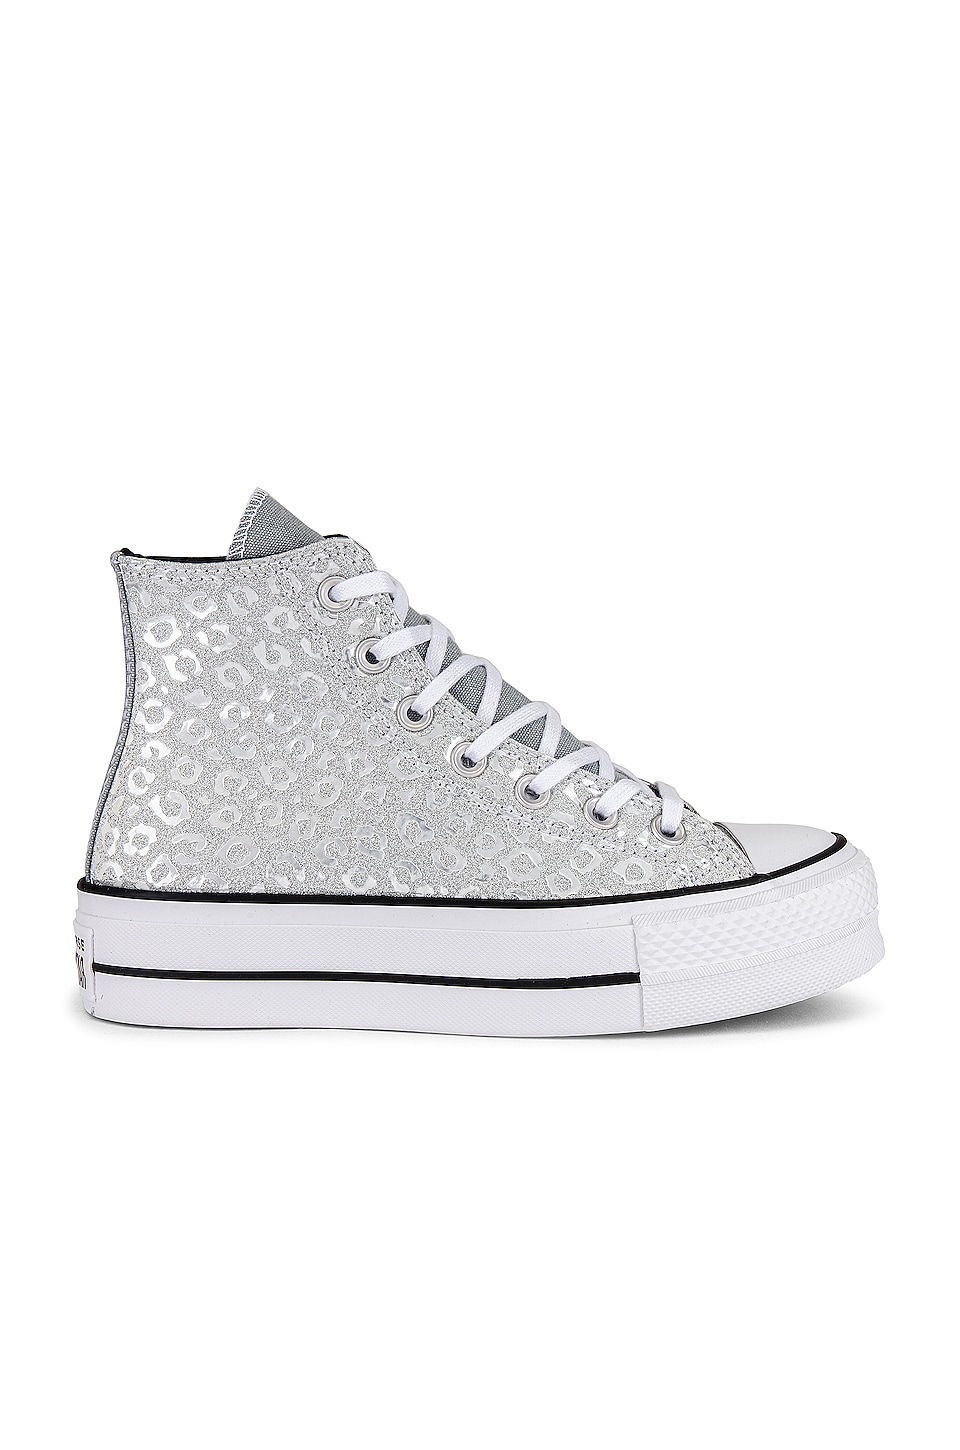 Converse Chuck Taylor All Star Glitter Platform Sneaker in Silver, Black, &  White | REVOLVE